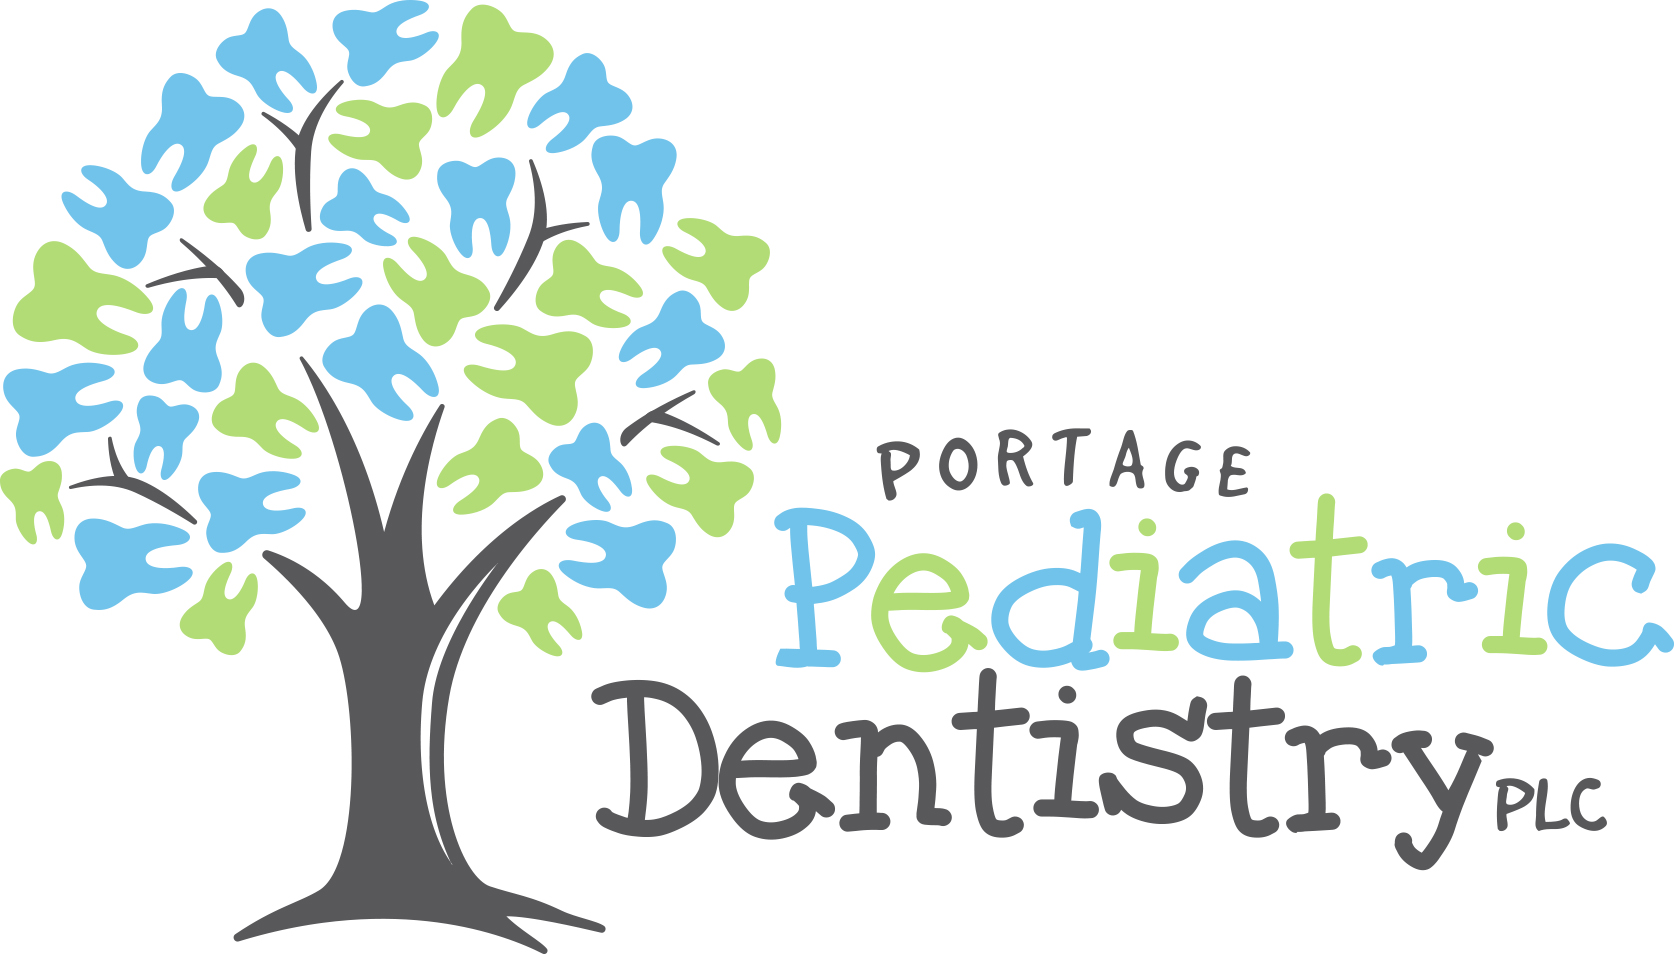 Portage Pediatric Dentistry Logo No Names Horizontal w PLC.jpg